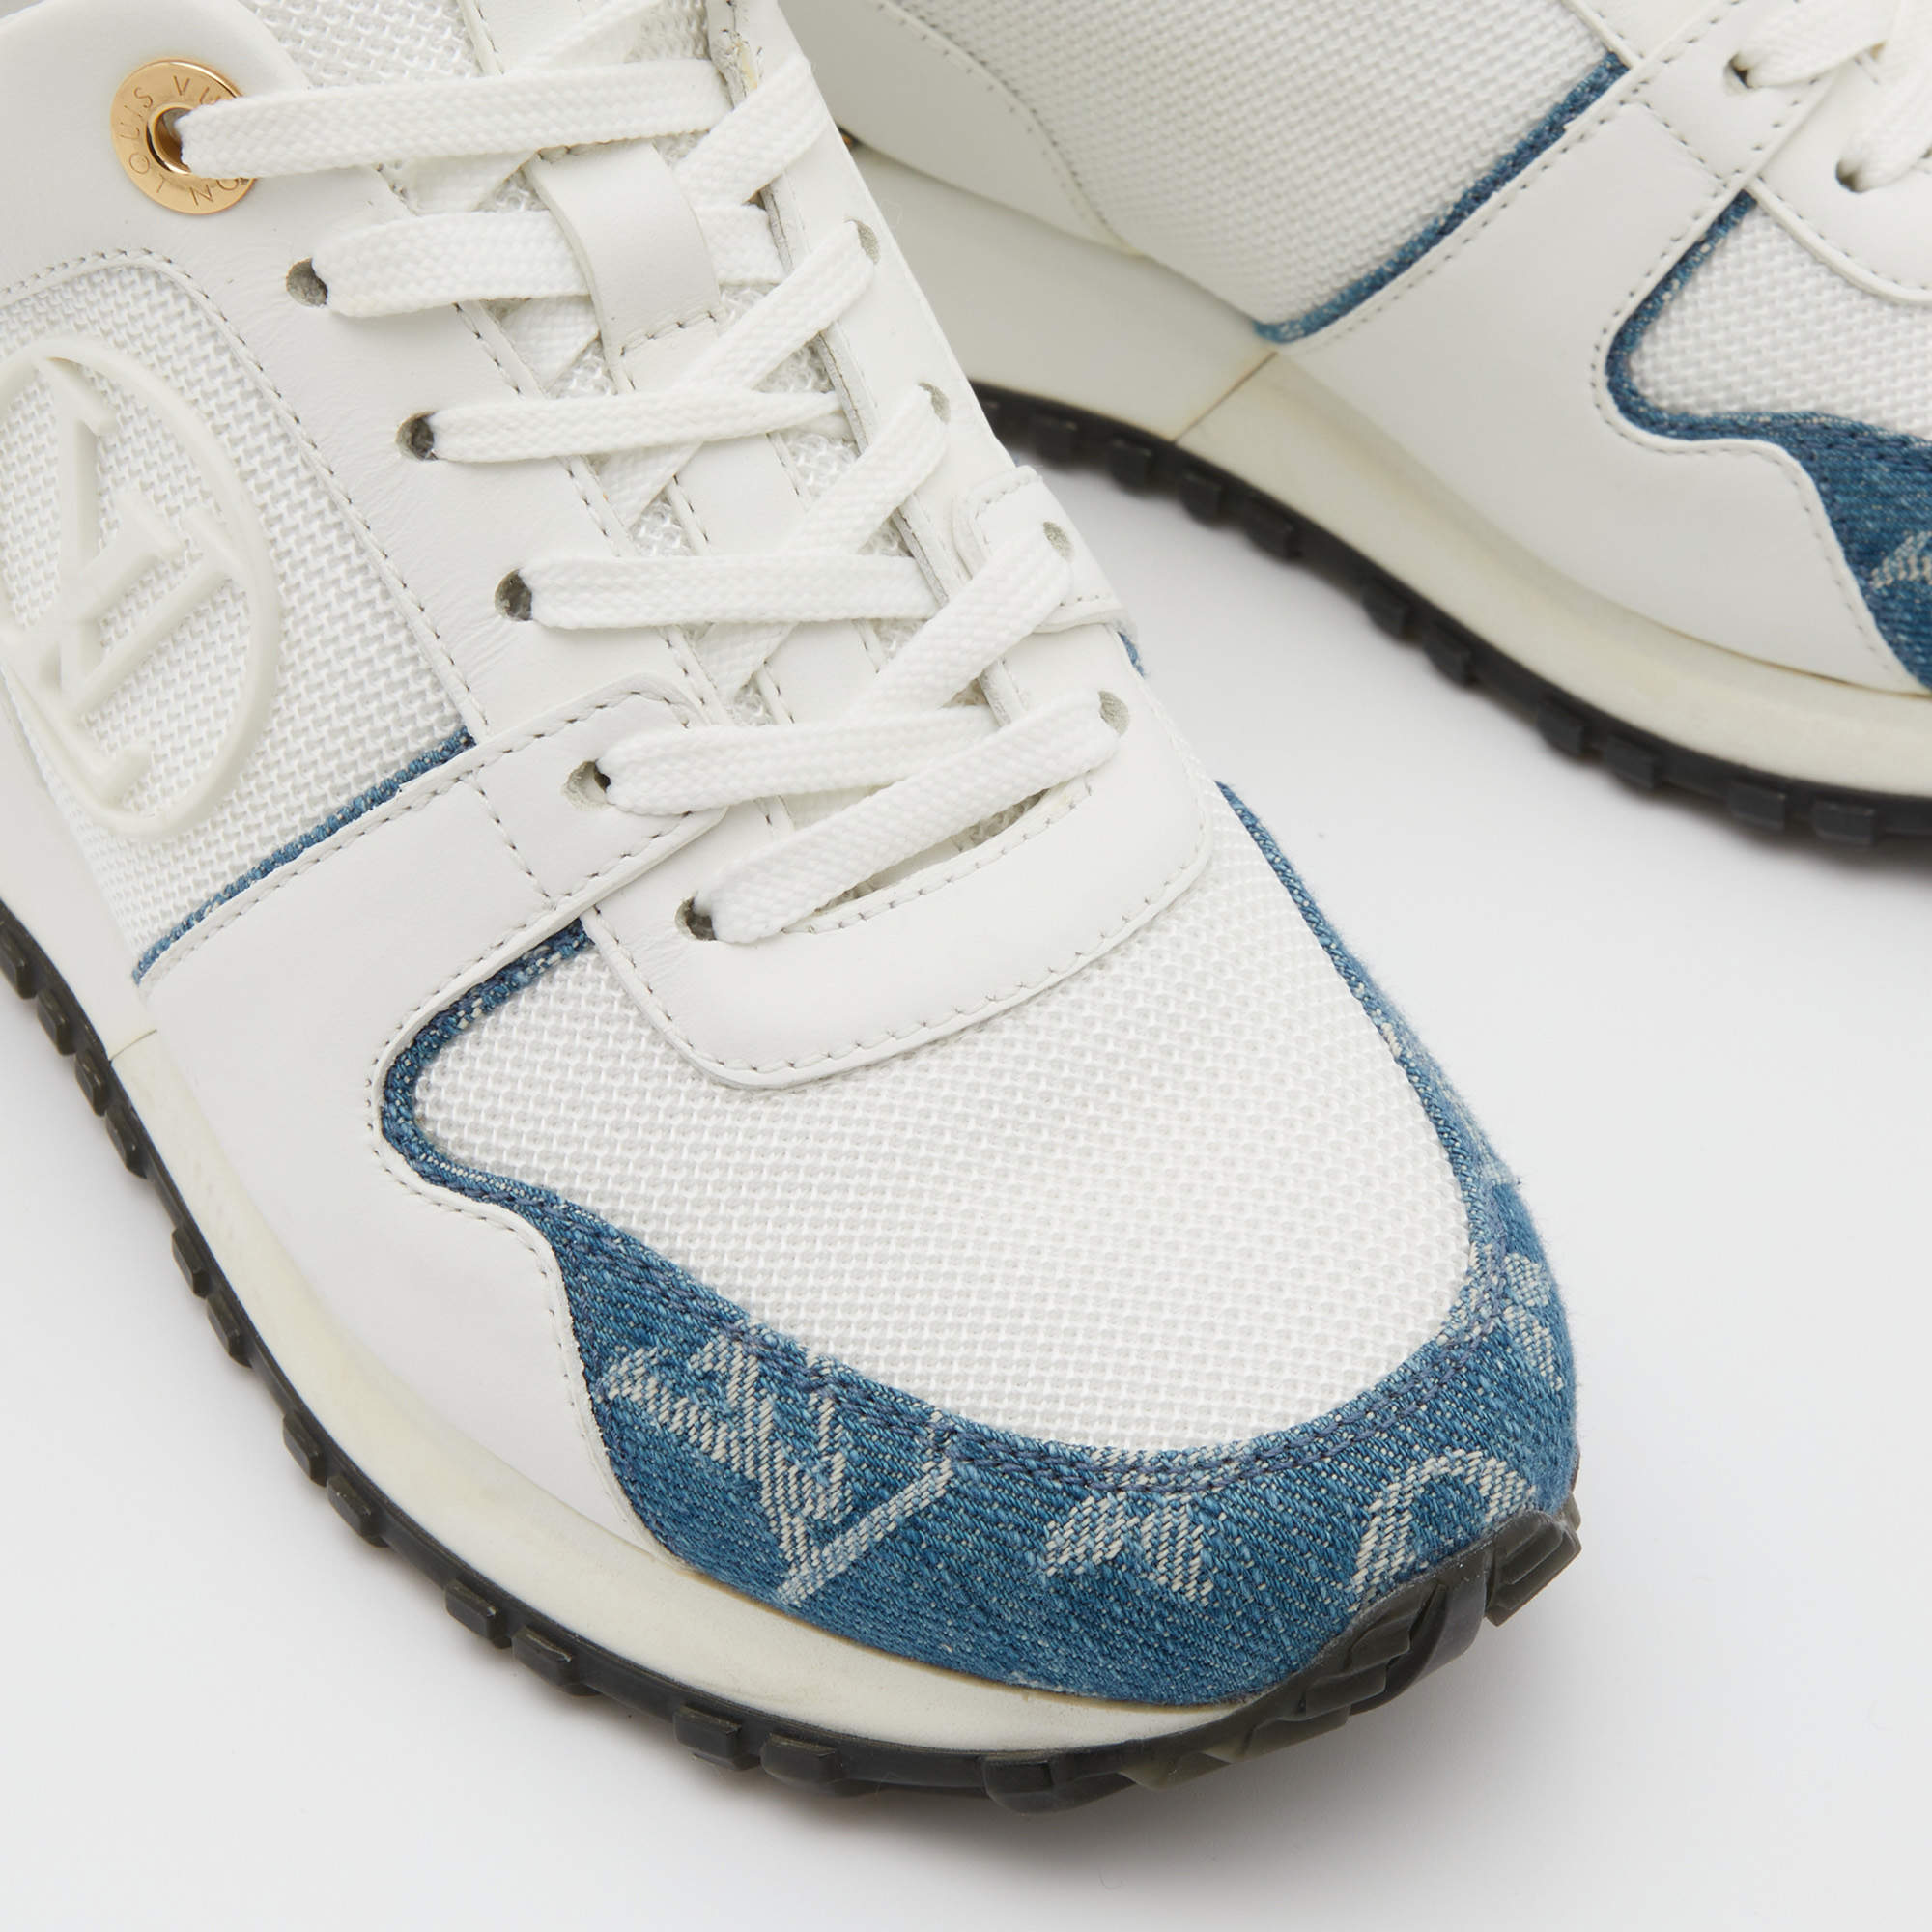 Louis Vuitton White Mesh Fabric and Blue Denim Run Away Sneakers